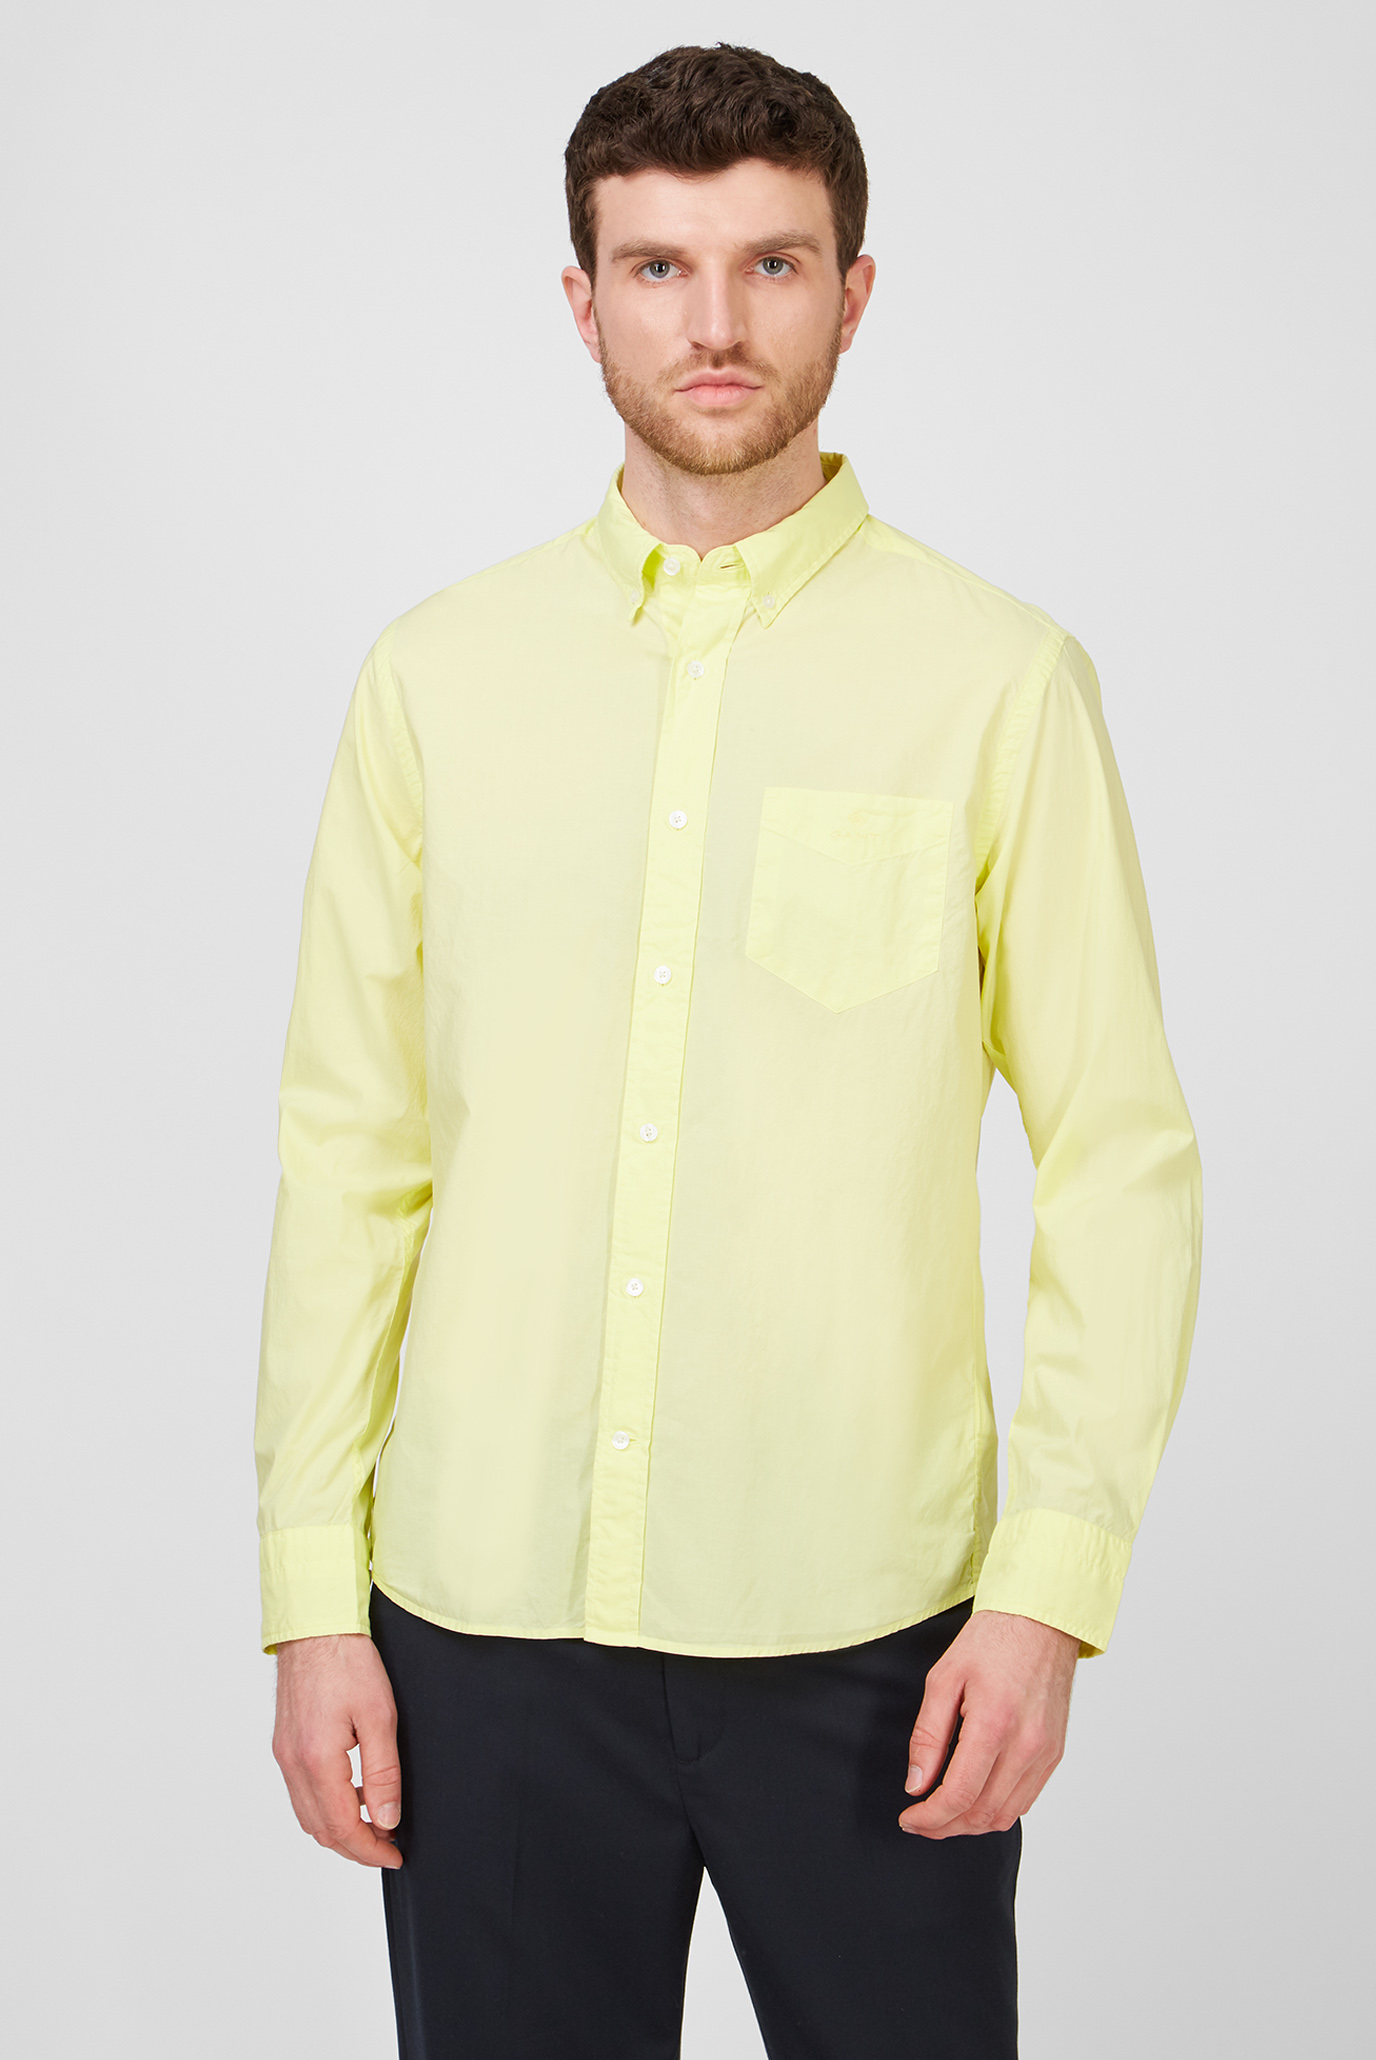 Мужская желтая рубашка REG SUNFADED 1